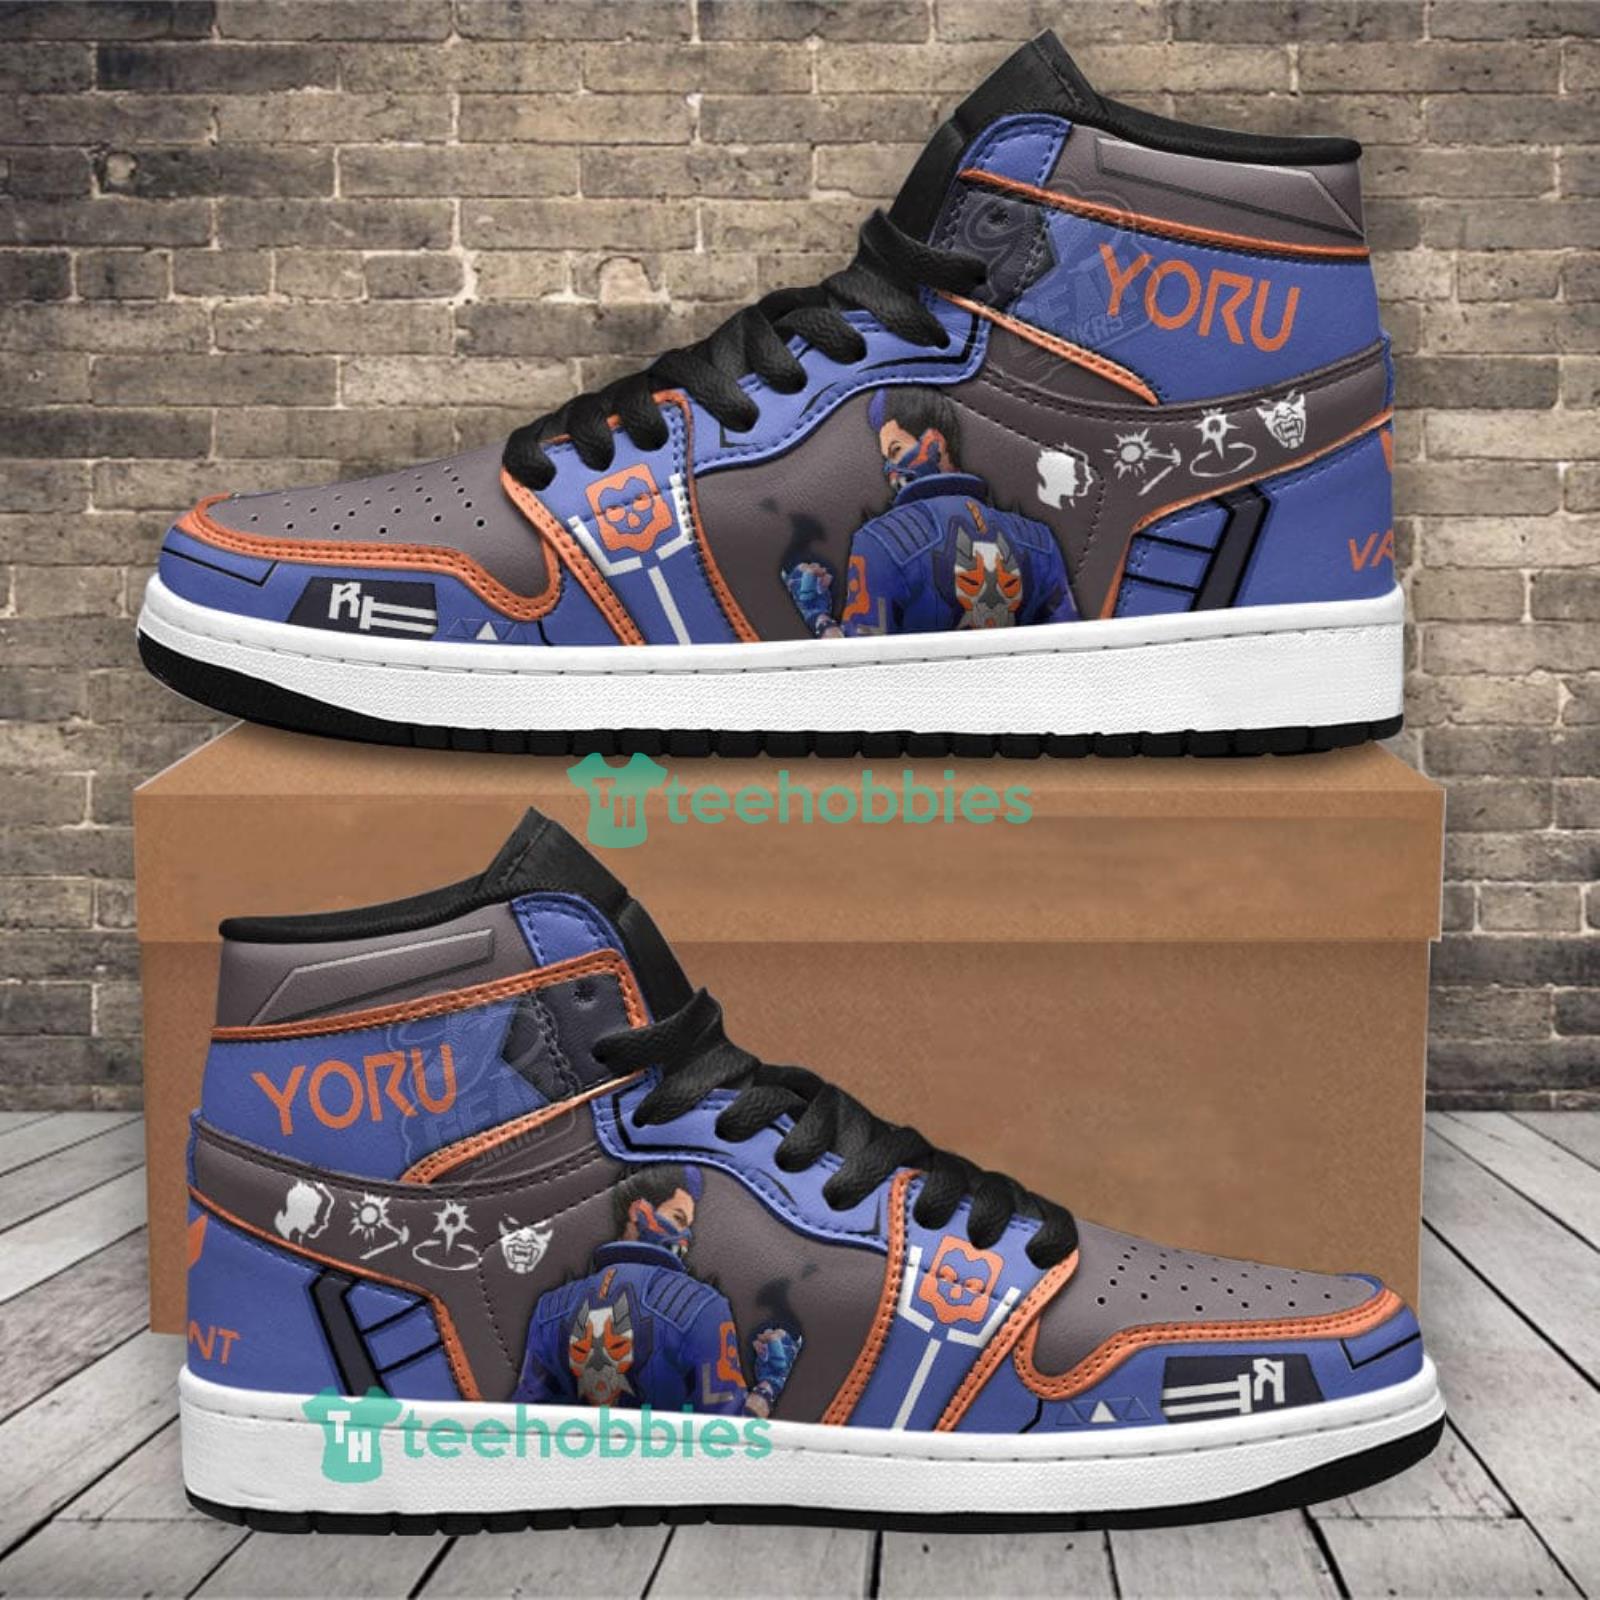 Yoru Valorant Agent Air Jordan Hightop Shoes Sneakers For Gamer Product Photo 1